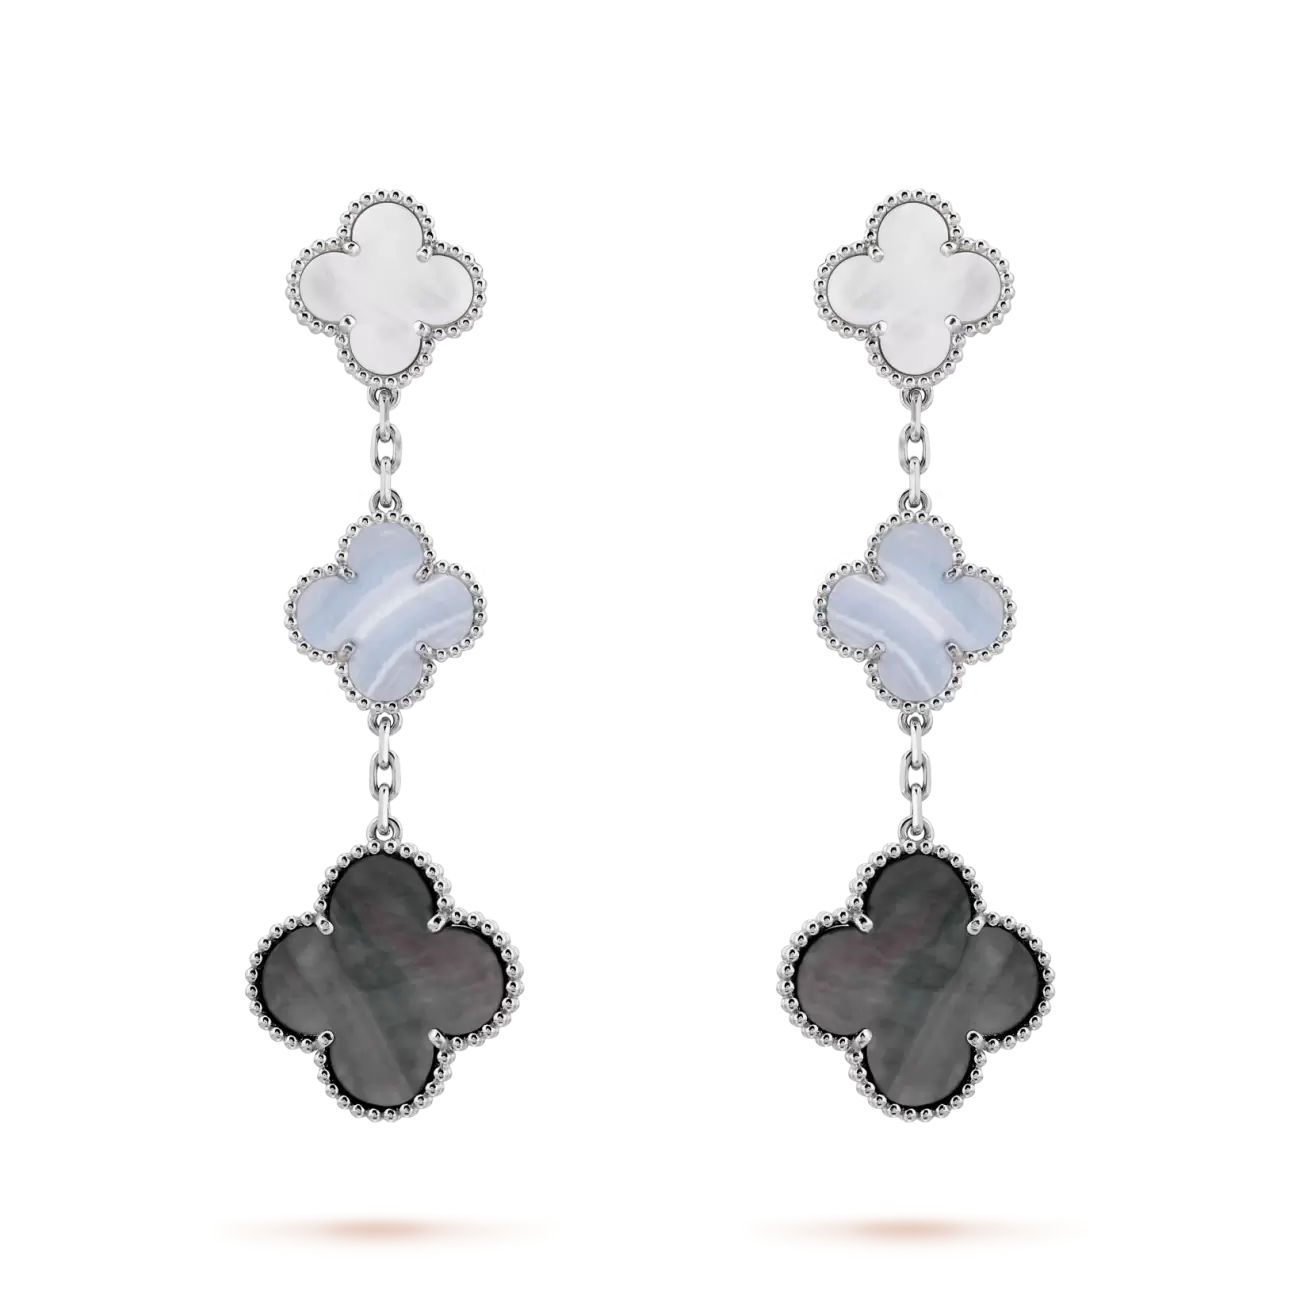 Magic Alhambra earrings, 3 motifs chalcedony